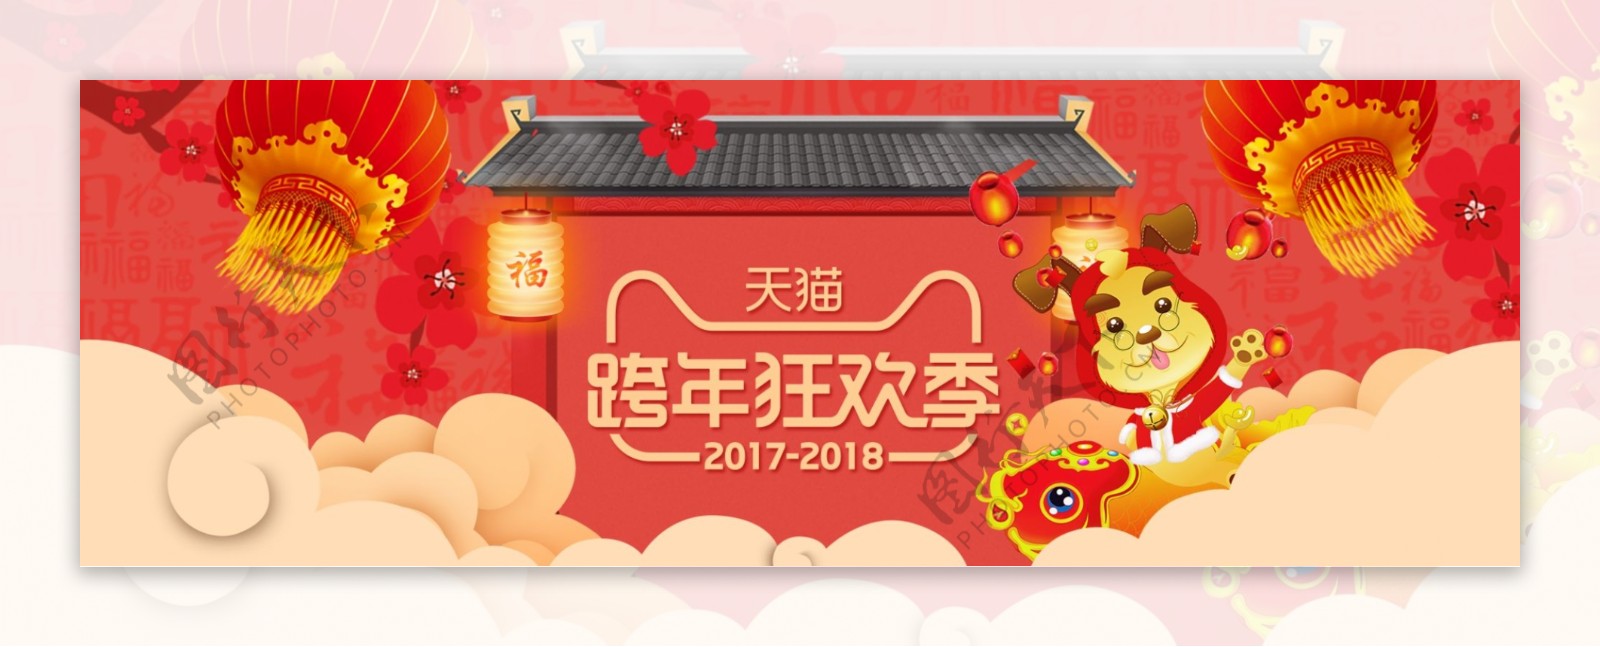 红色中国风喜庆跨年狂欢季banner